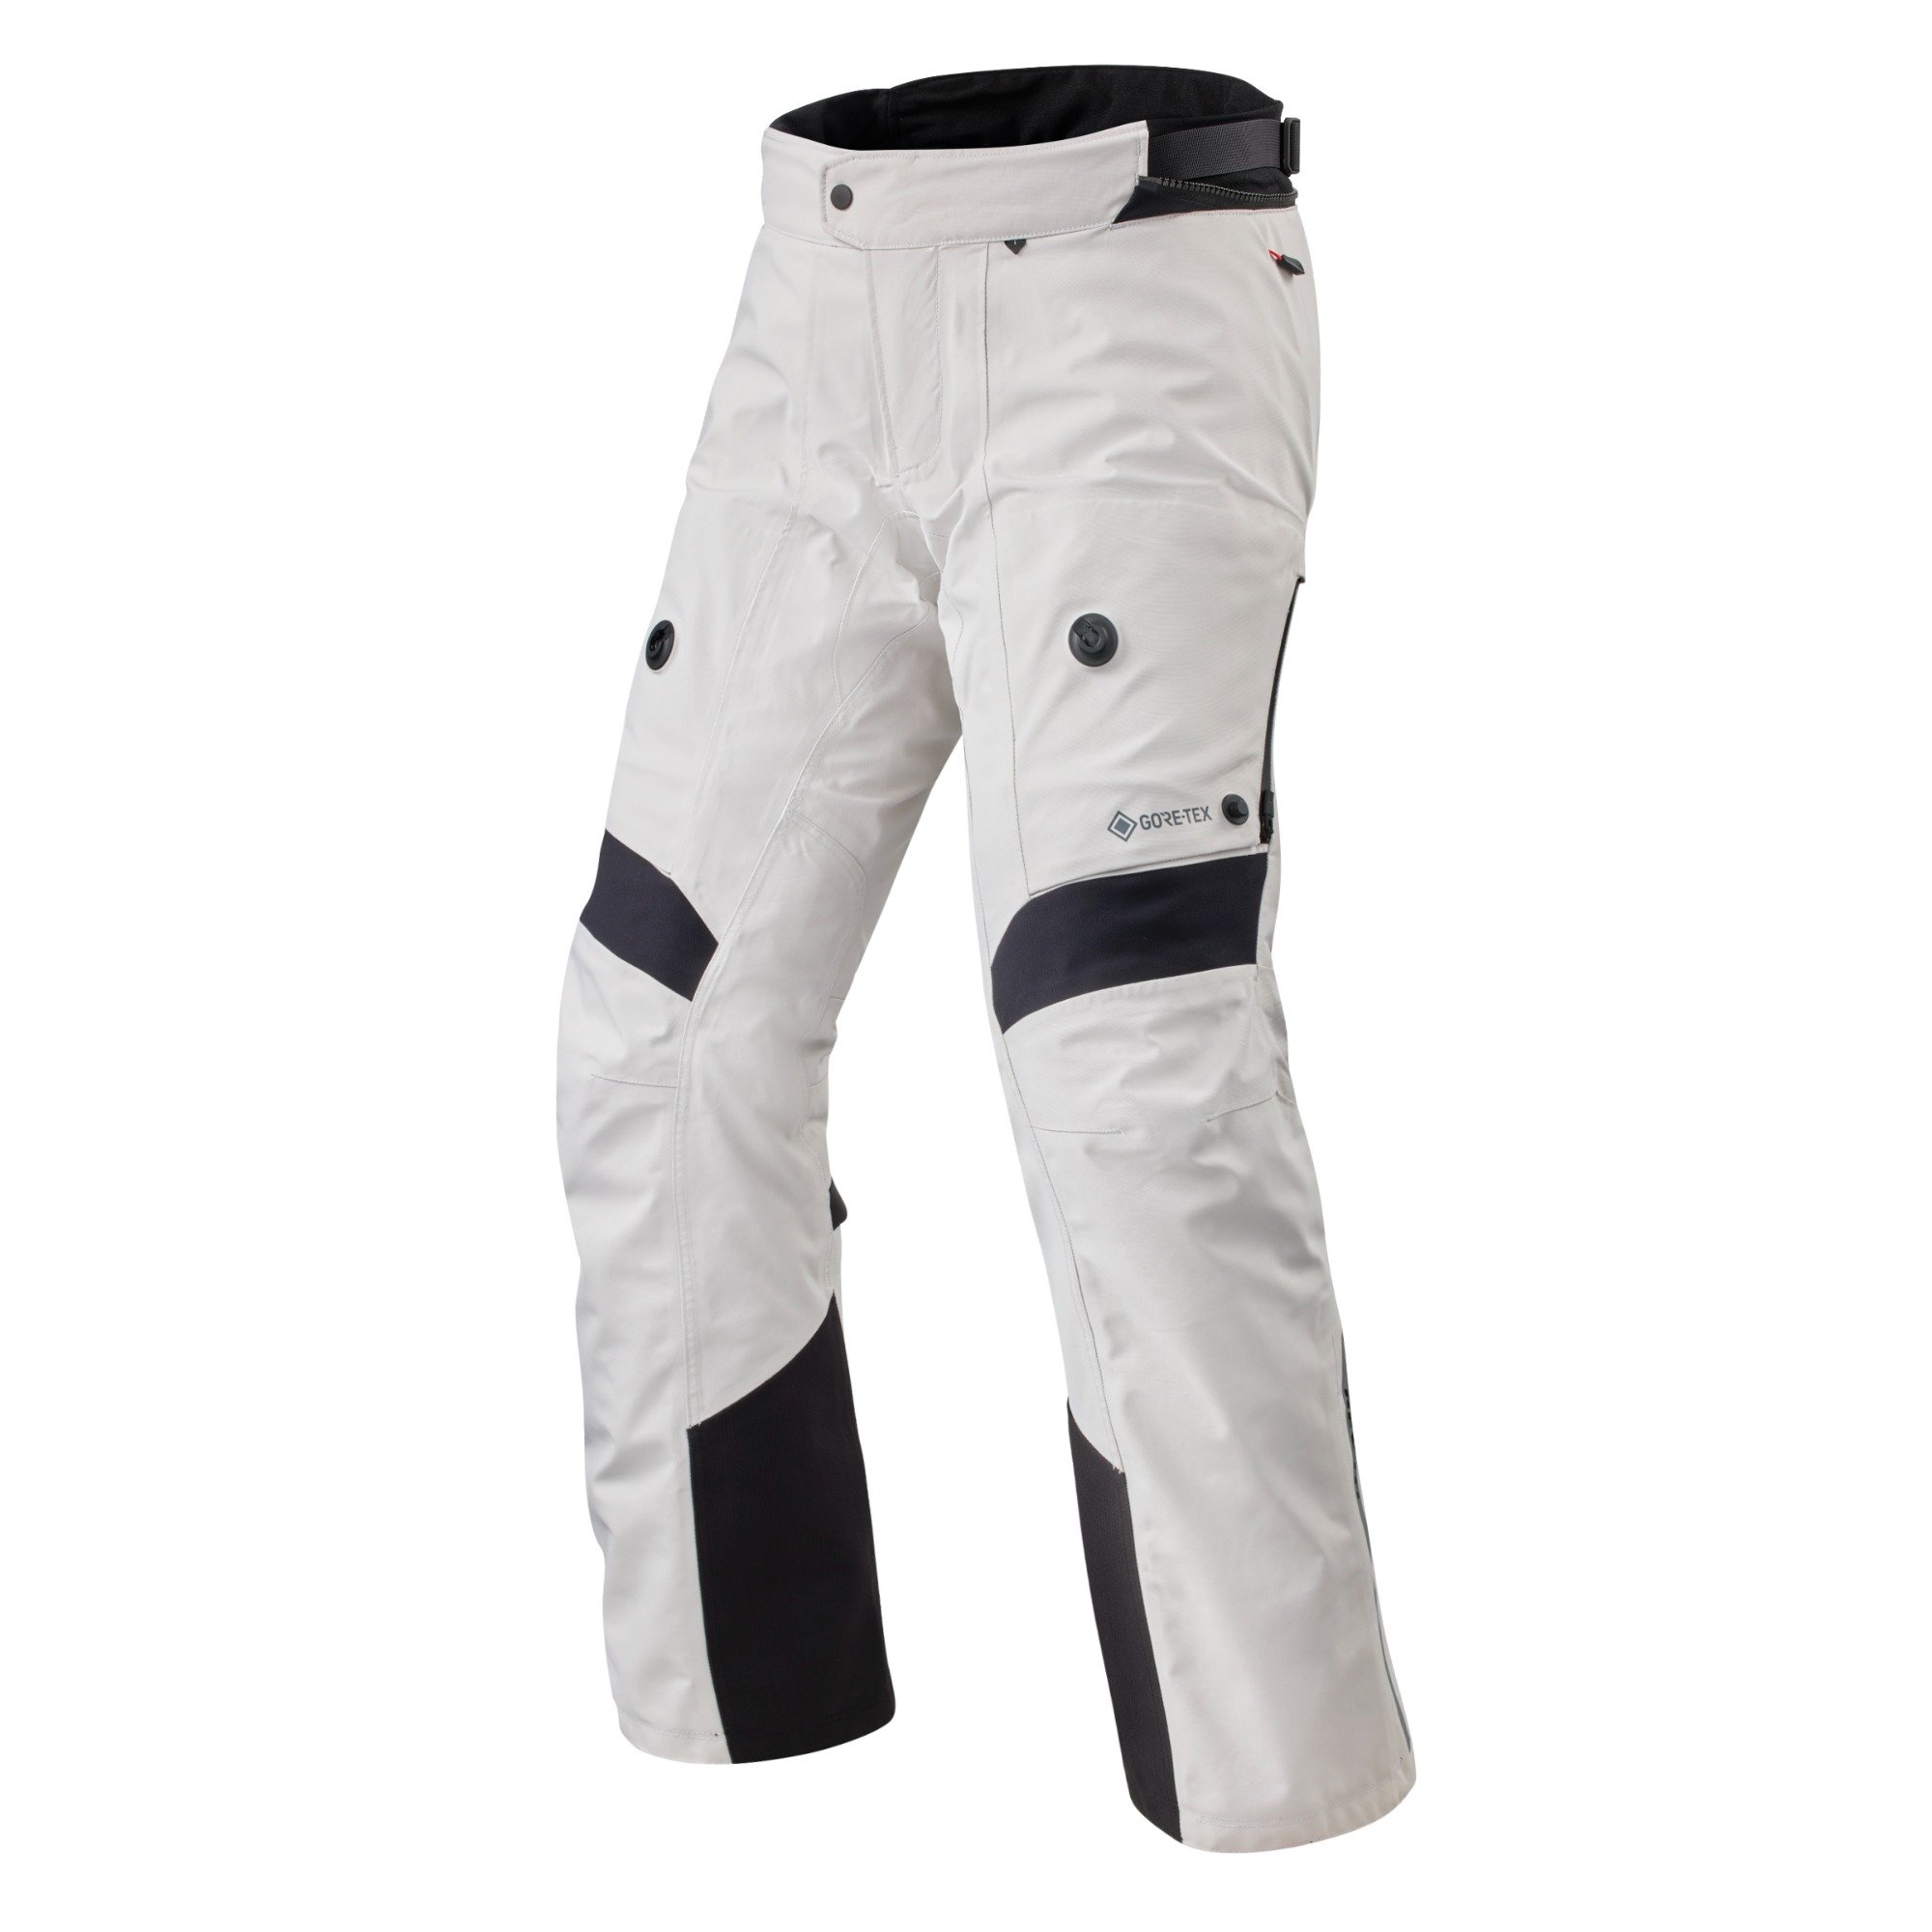 Image of REV'IT! Pants Poseidon 3 GTX Silver Black Short Motorcycle Pants Size 2XL EN